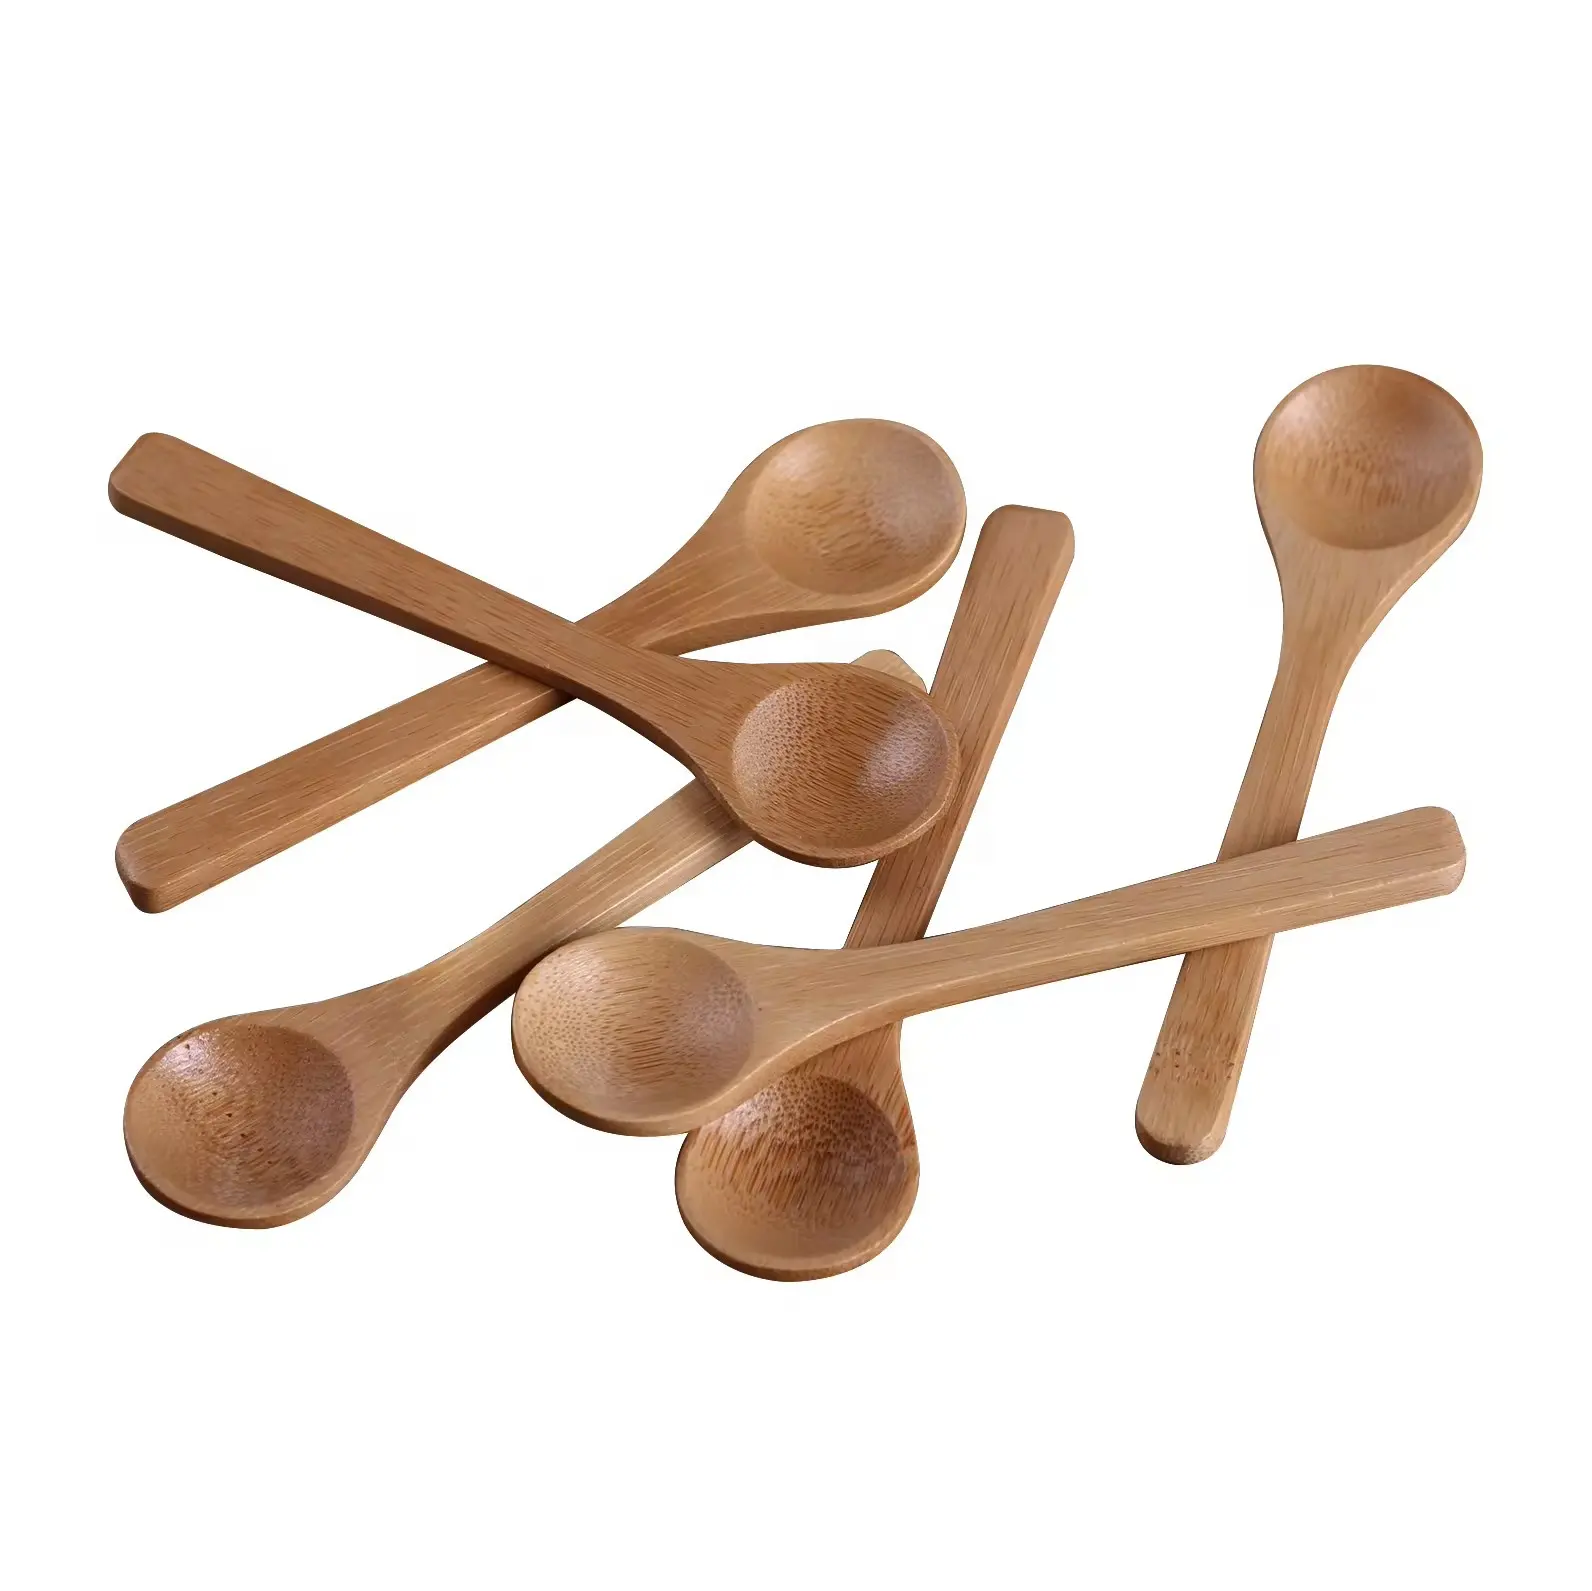 Mini bamboo wooden spoon, kitchen utensils, environmentally friendly gadgets.